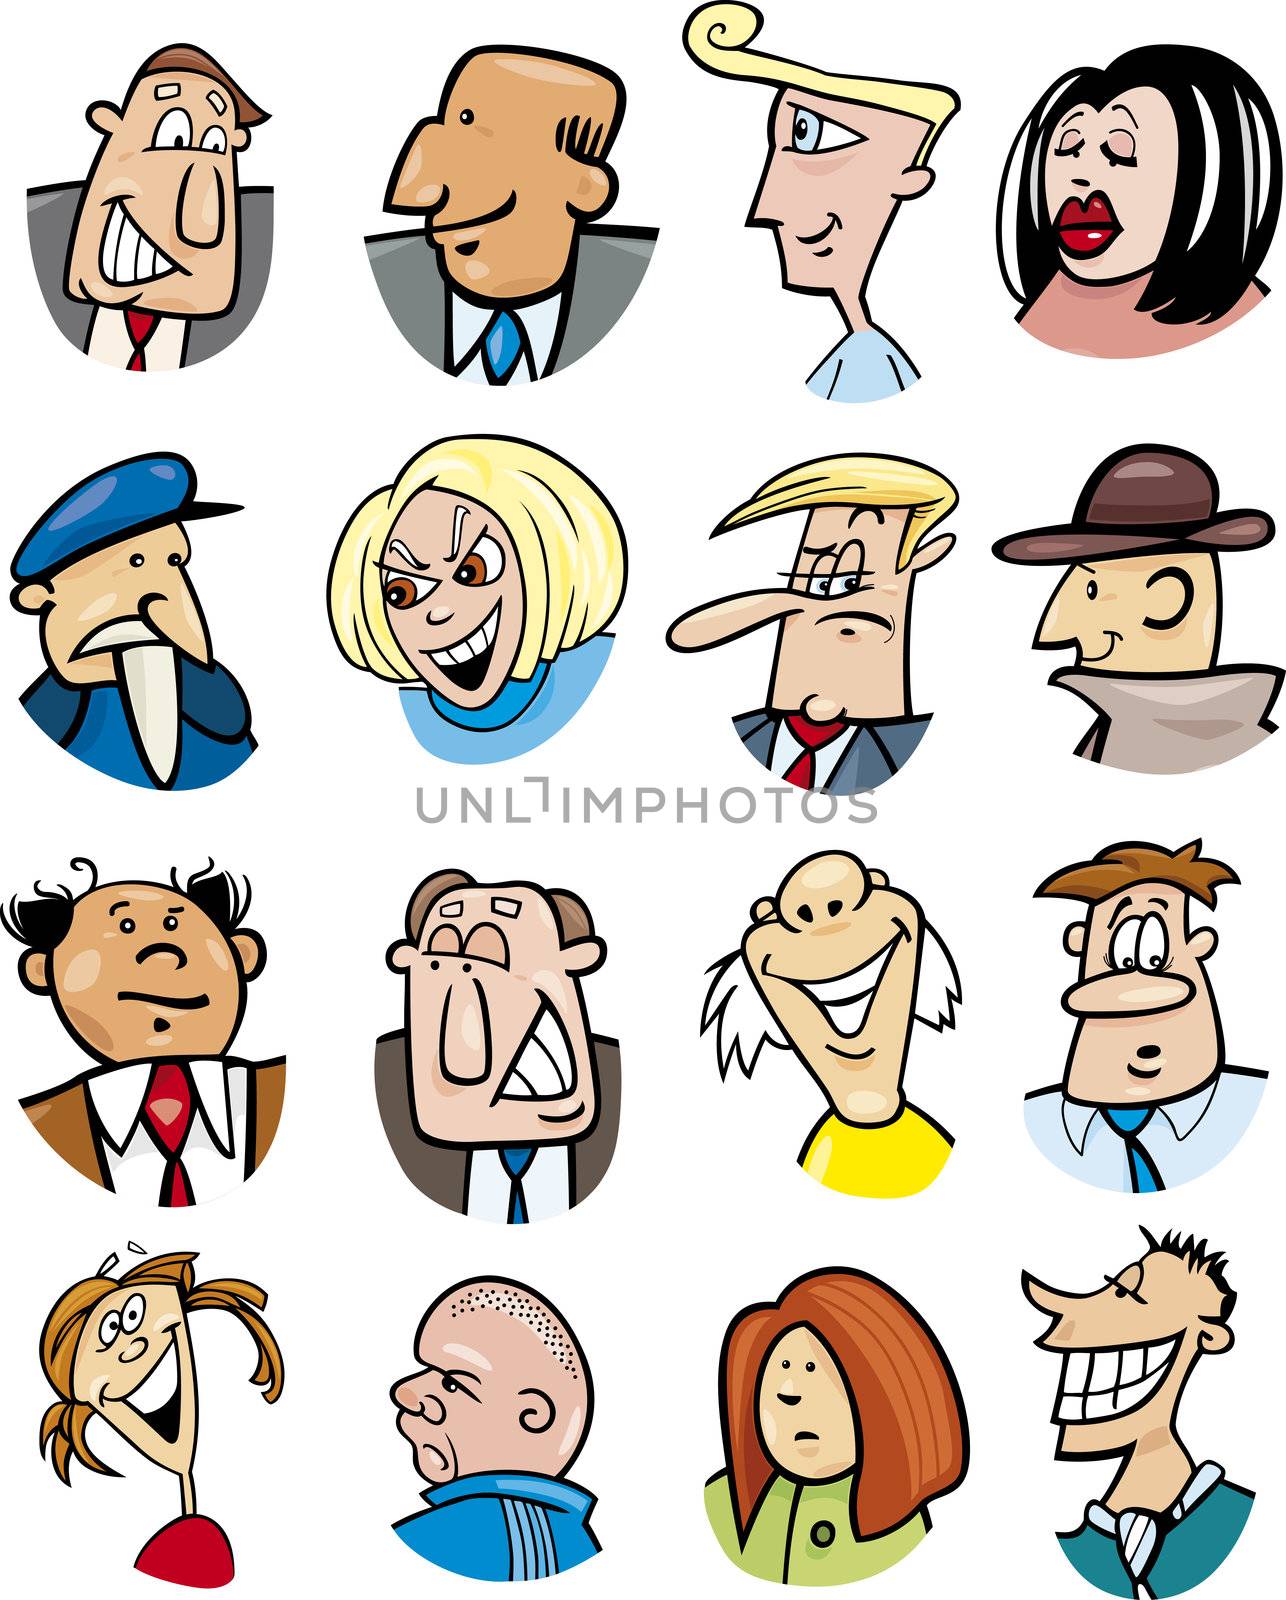 cartoon people characters and emotions by izakowski